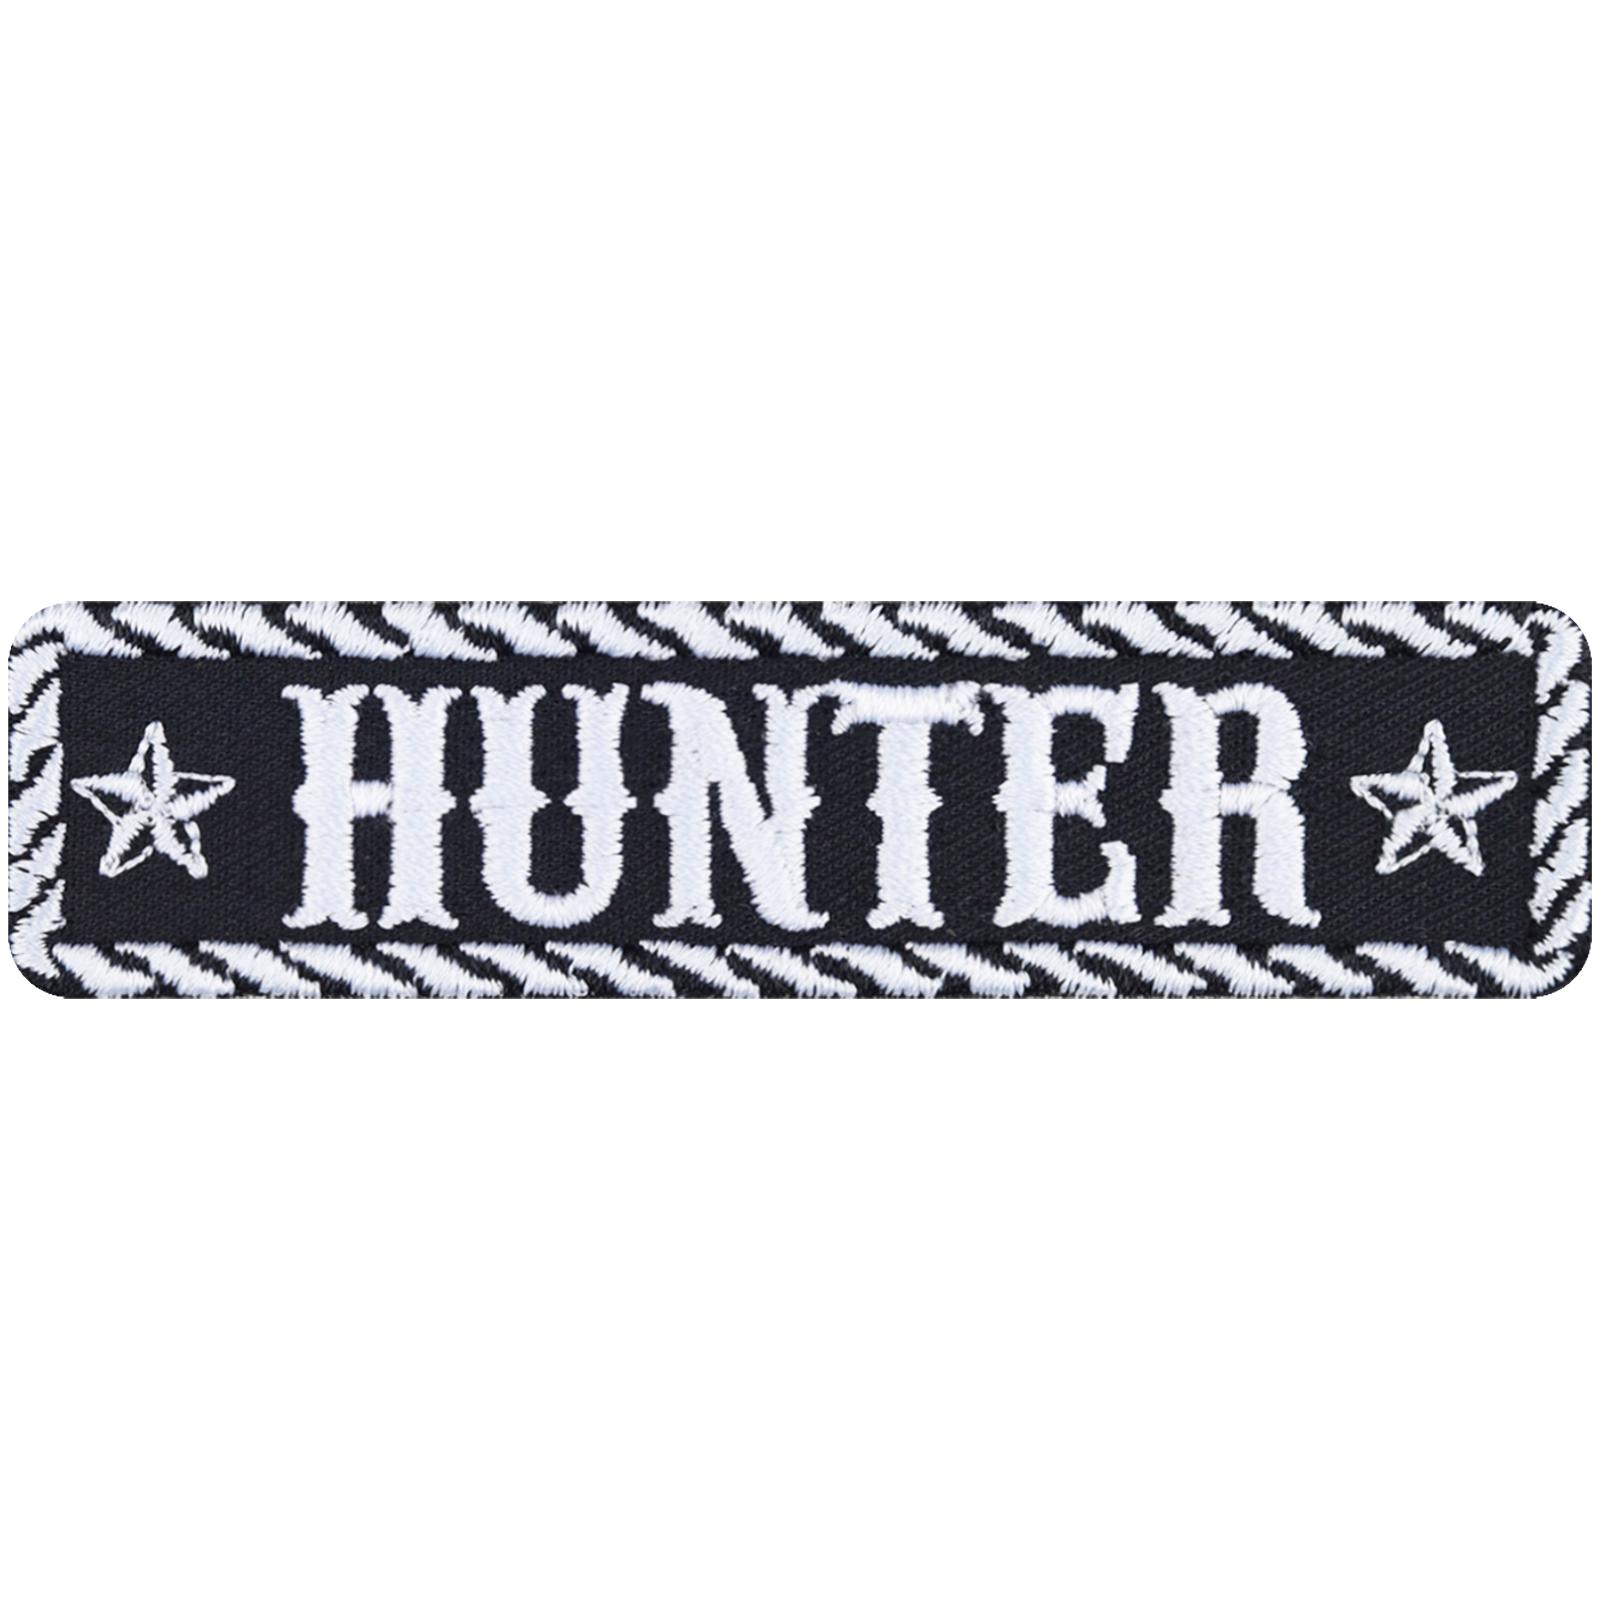 Hunter - Patch